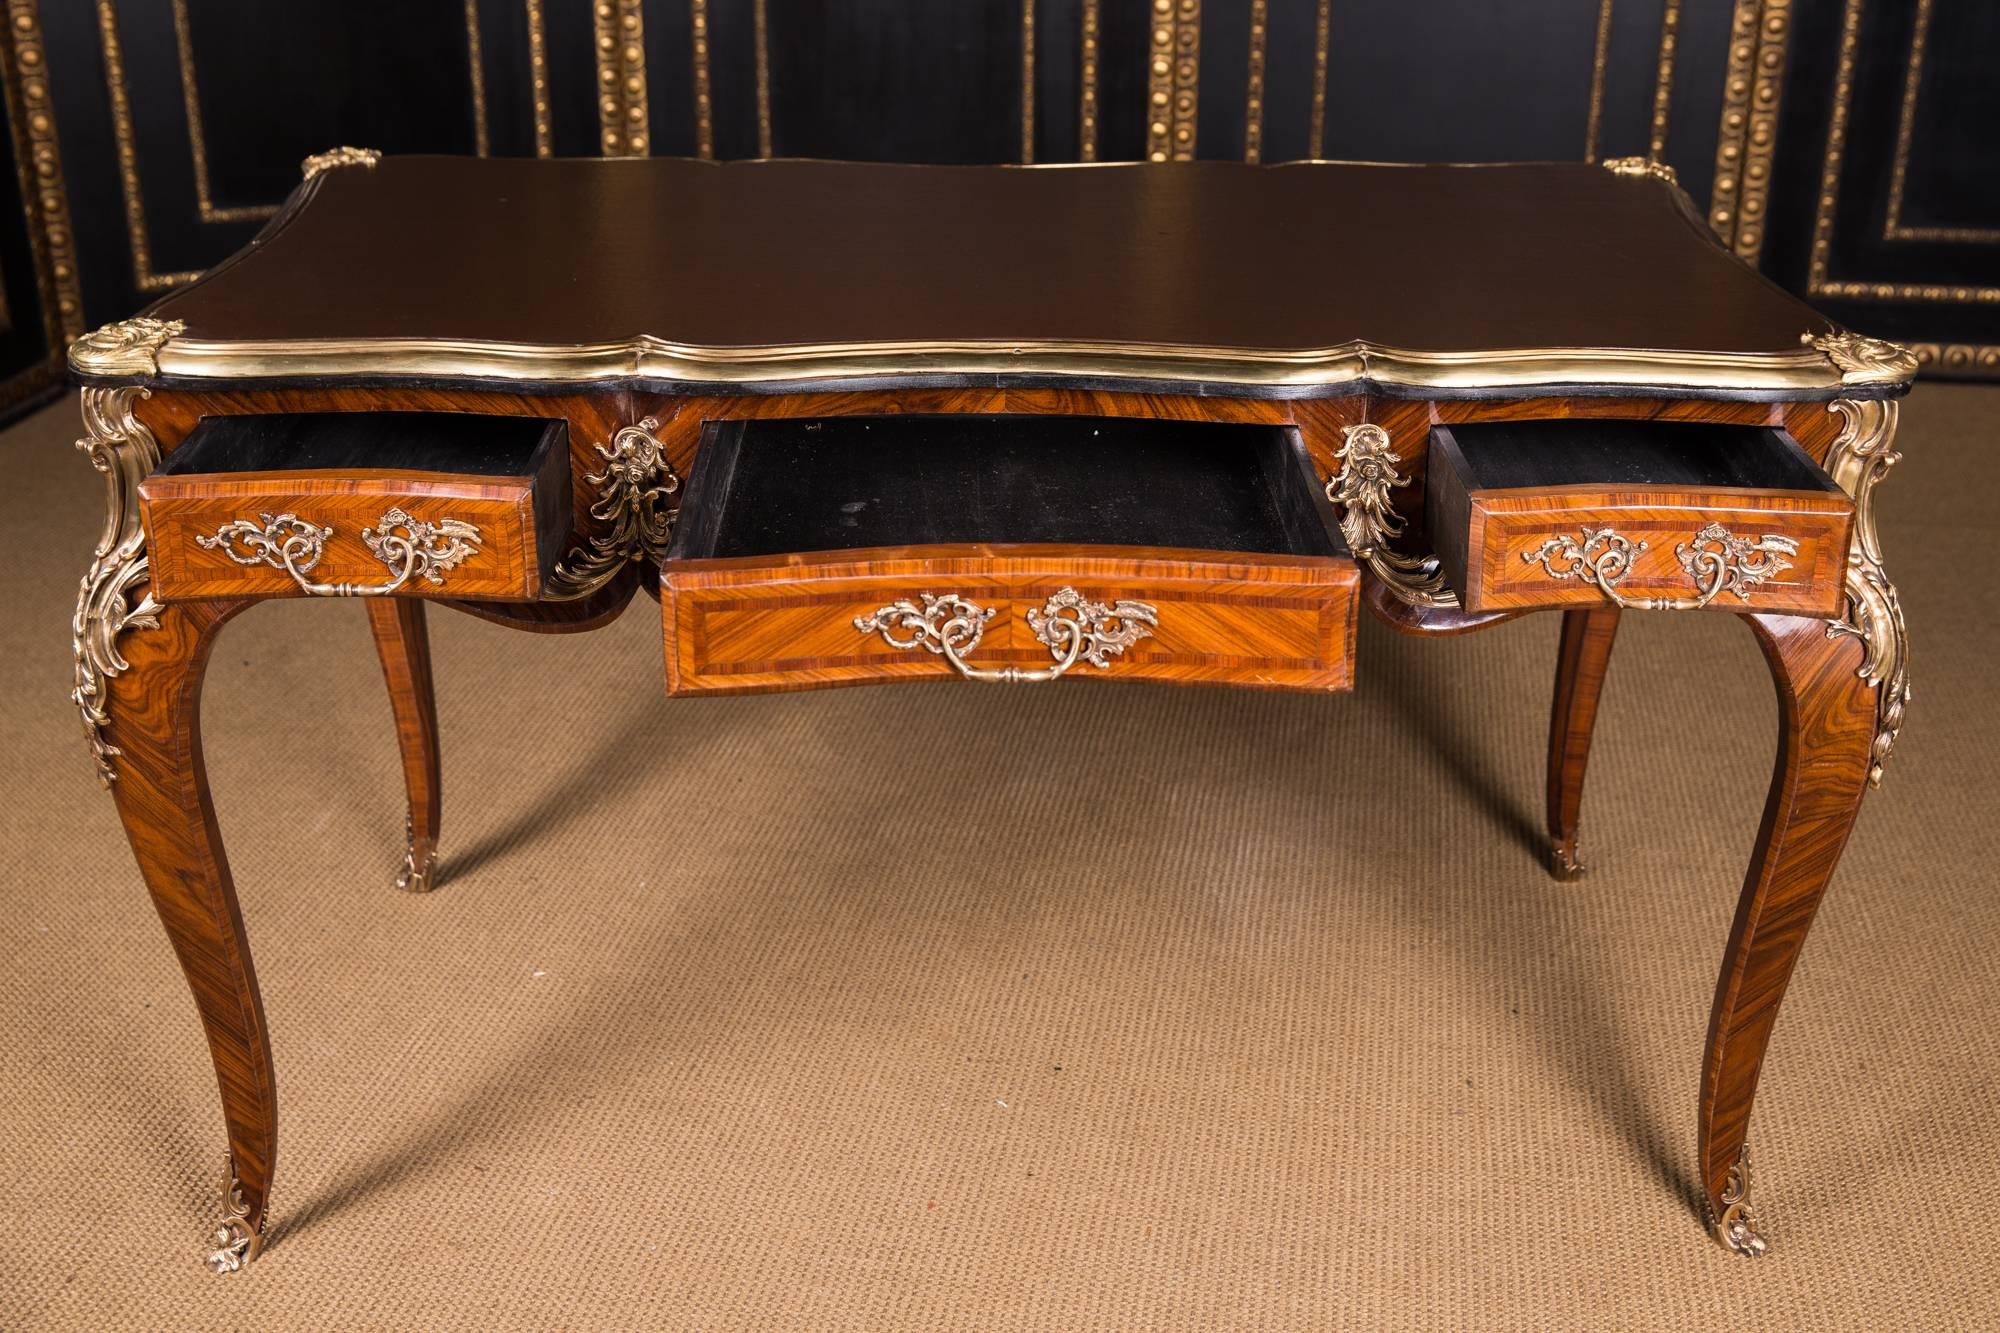 20th Century French Desk Bureau Plat in the Louis XV Style Bois-Satiné Veneer 4